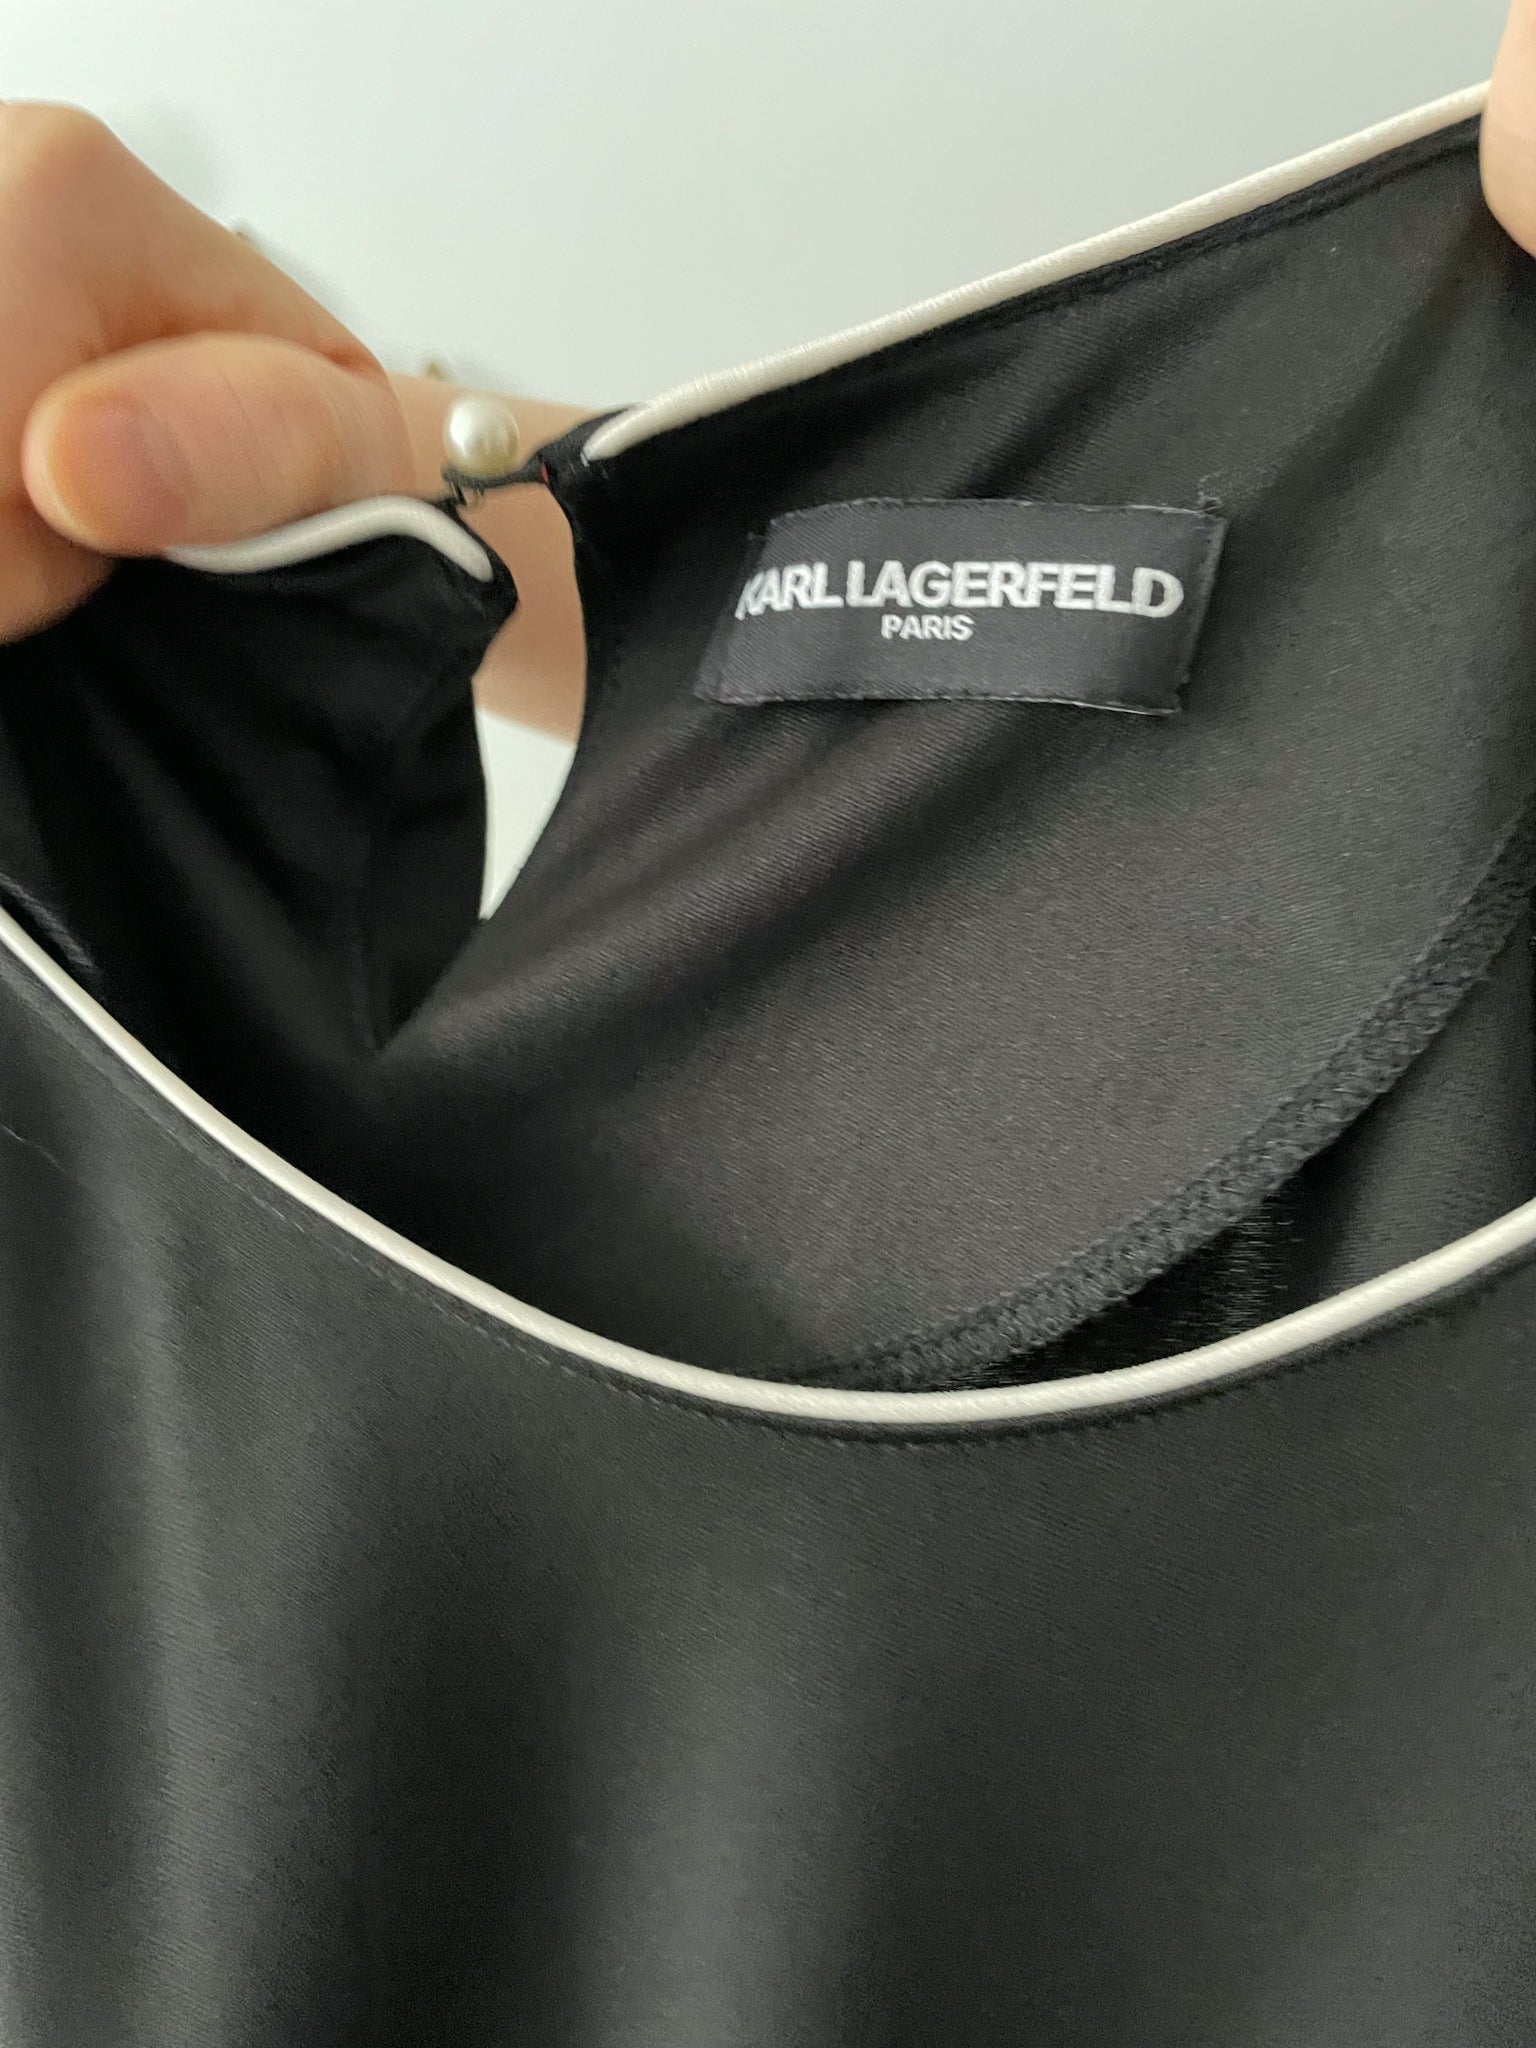 Karl Lagerfeld Paris womens Logo Leggings, Black, Medium US at